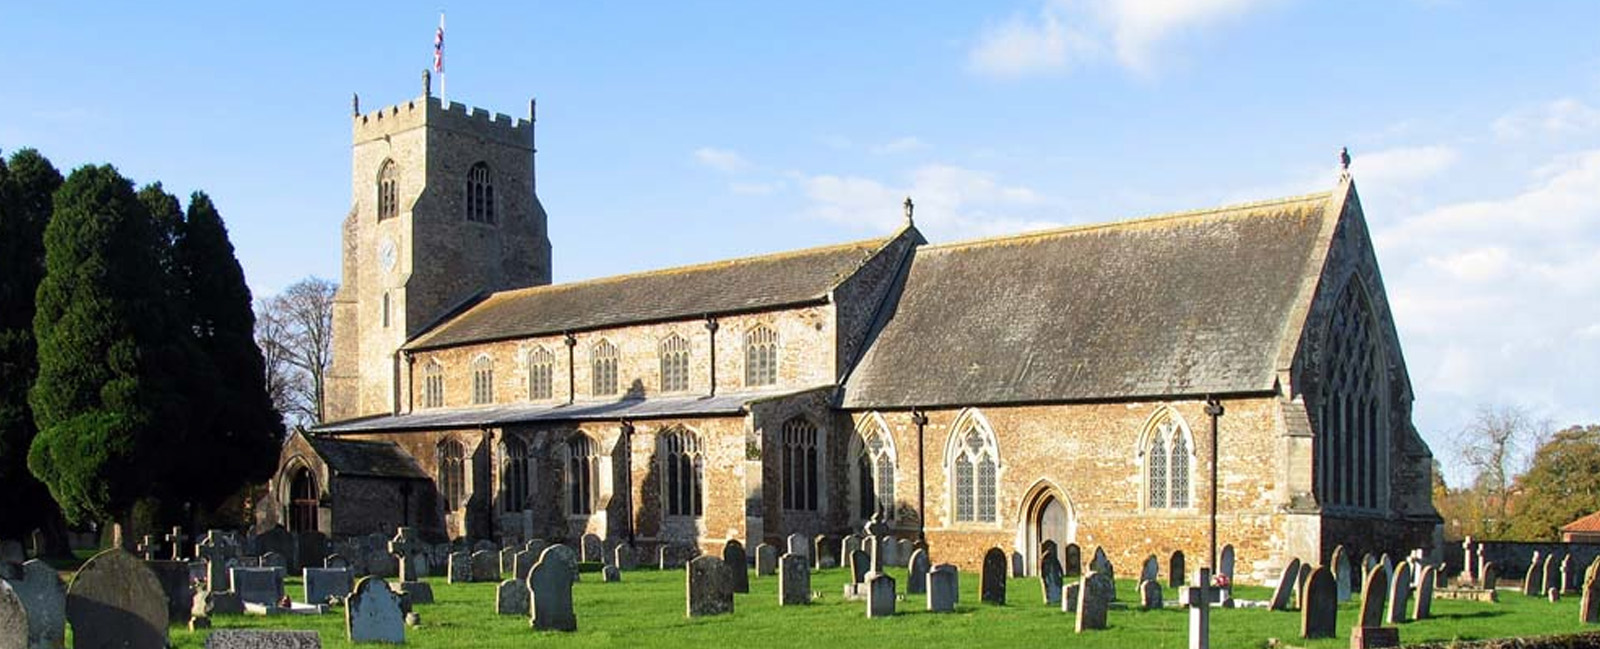 St Nicholas Church, Dersingham, Norfolk